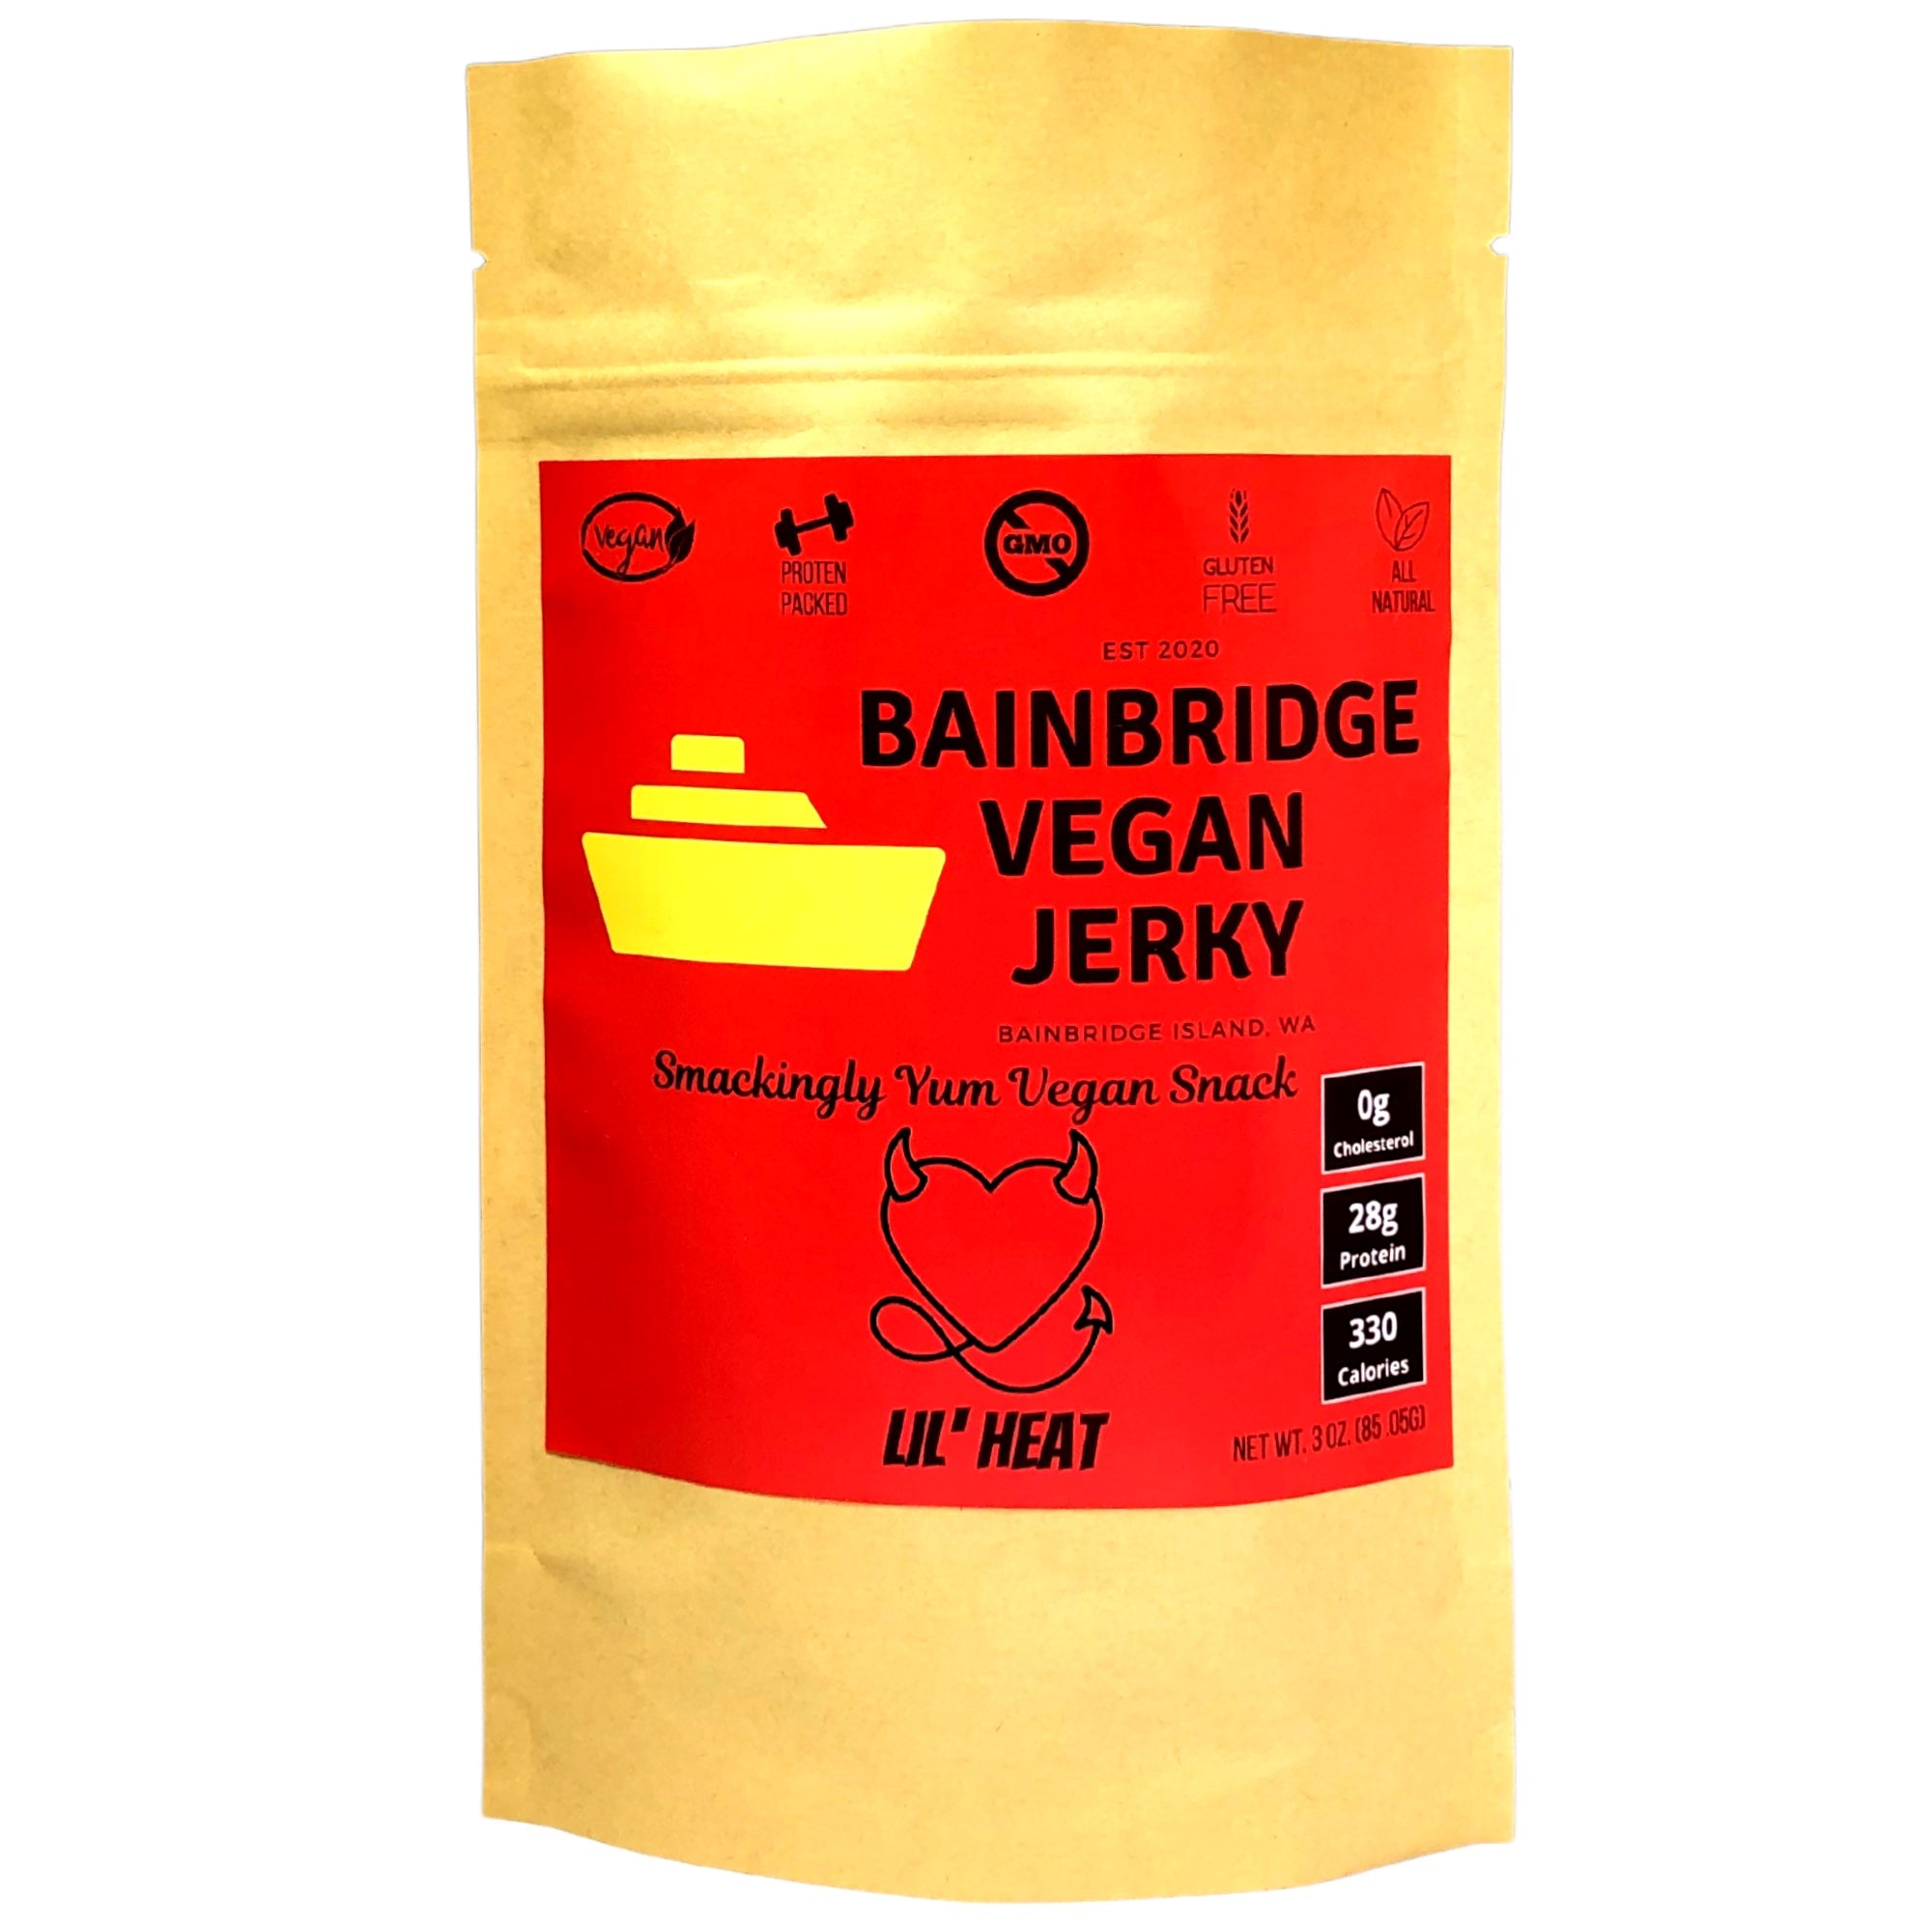 Bainbridge Vegan Jerky - Lil' Heat Vegan Beef Jerky, 3 oz (1 Pack)